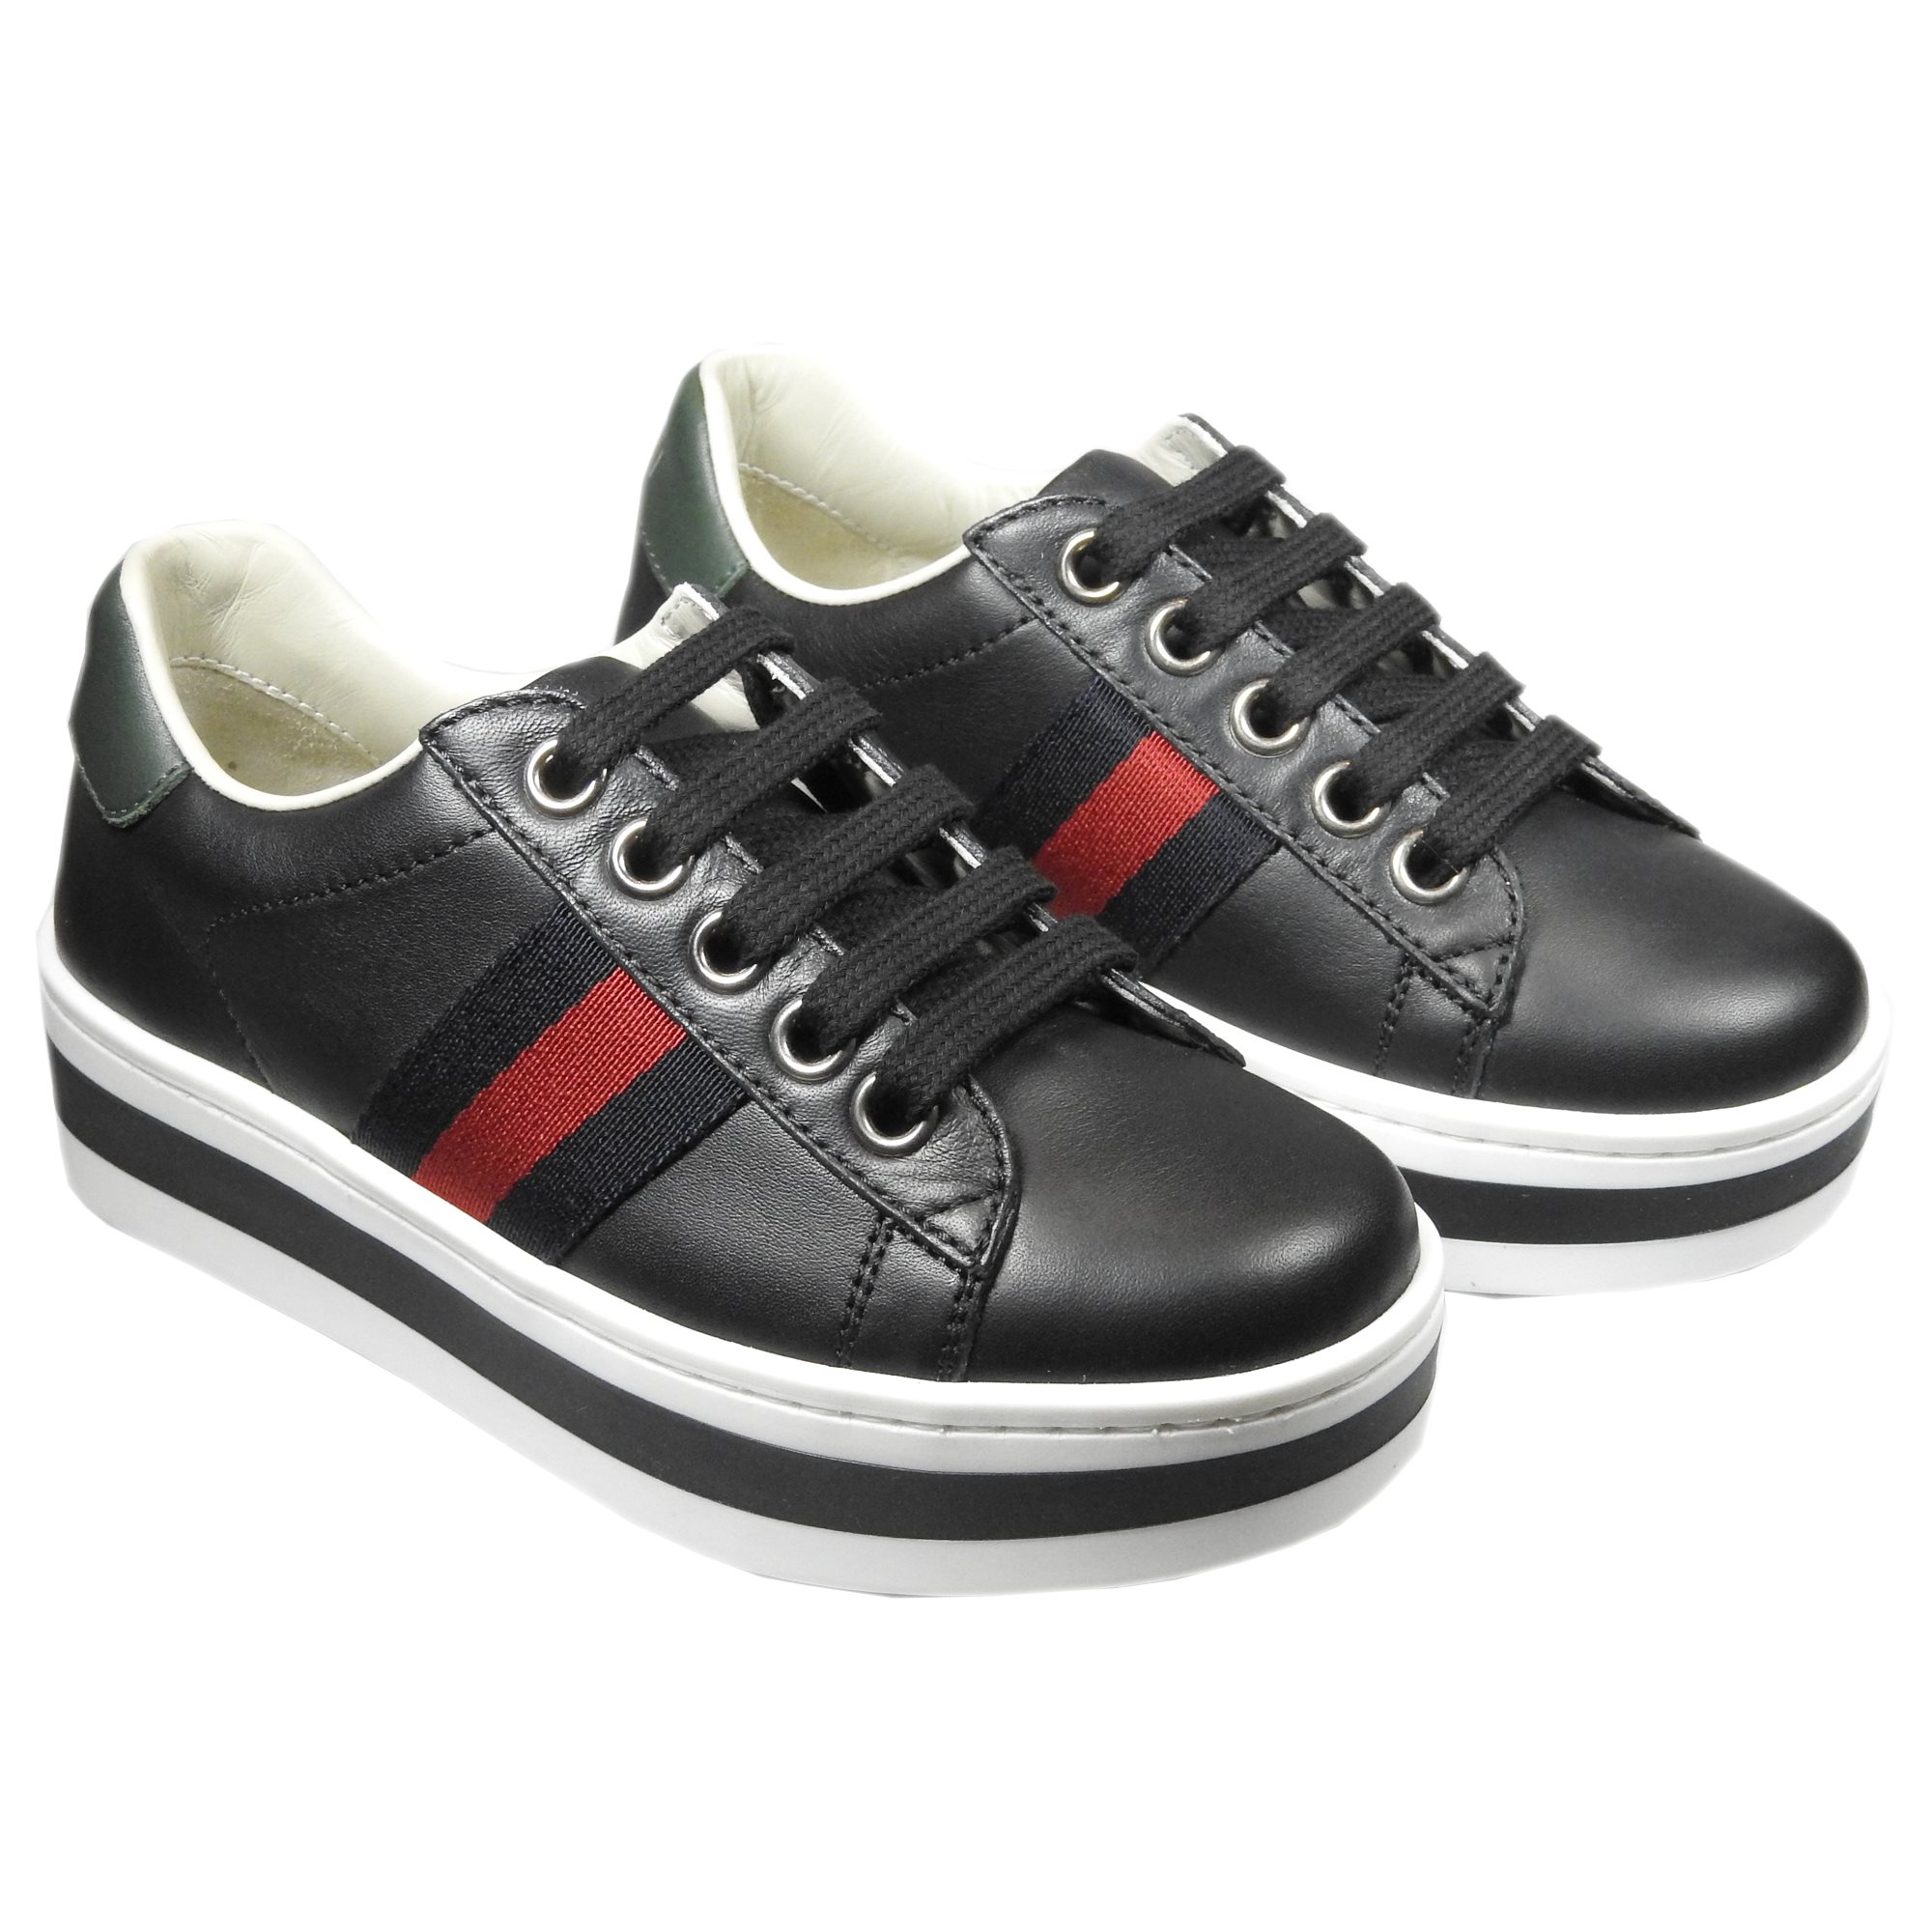 Panter weekend Ontdekking Producten - Gucci plateau sneaker zwart - La Boite - Kids fashion & shoes